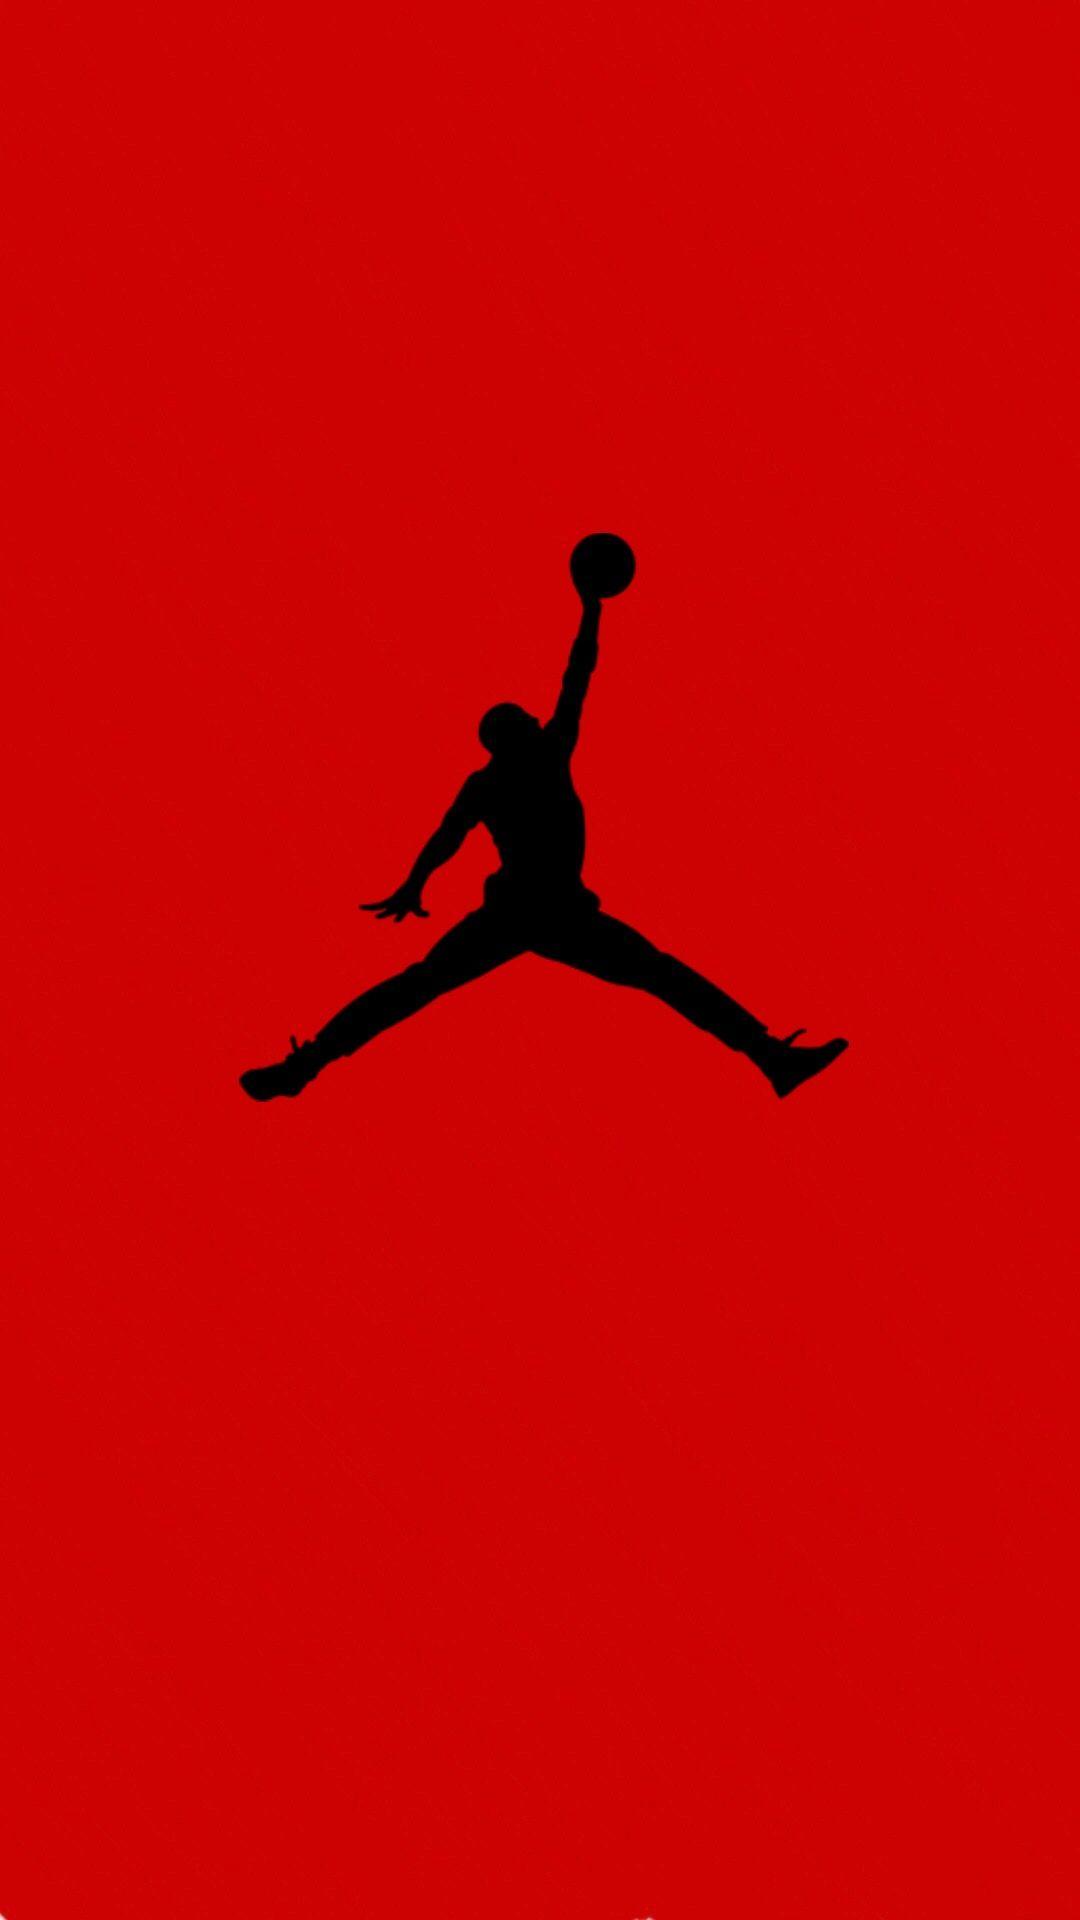 Jordan Logo - Air jordan logo iphone background. Background for iphone